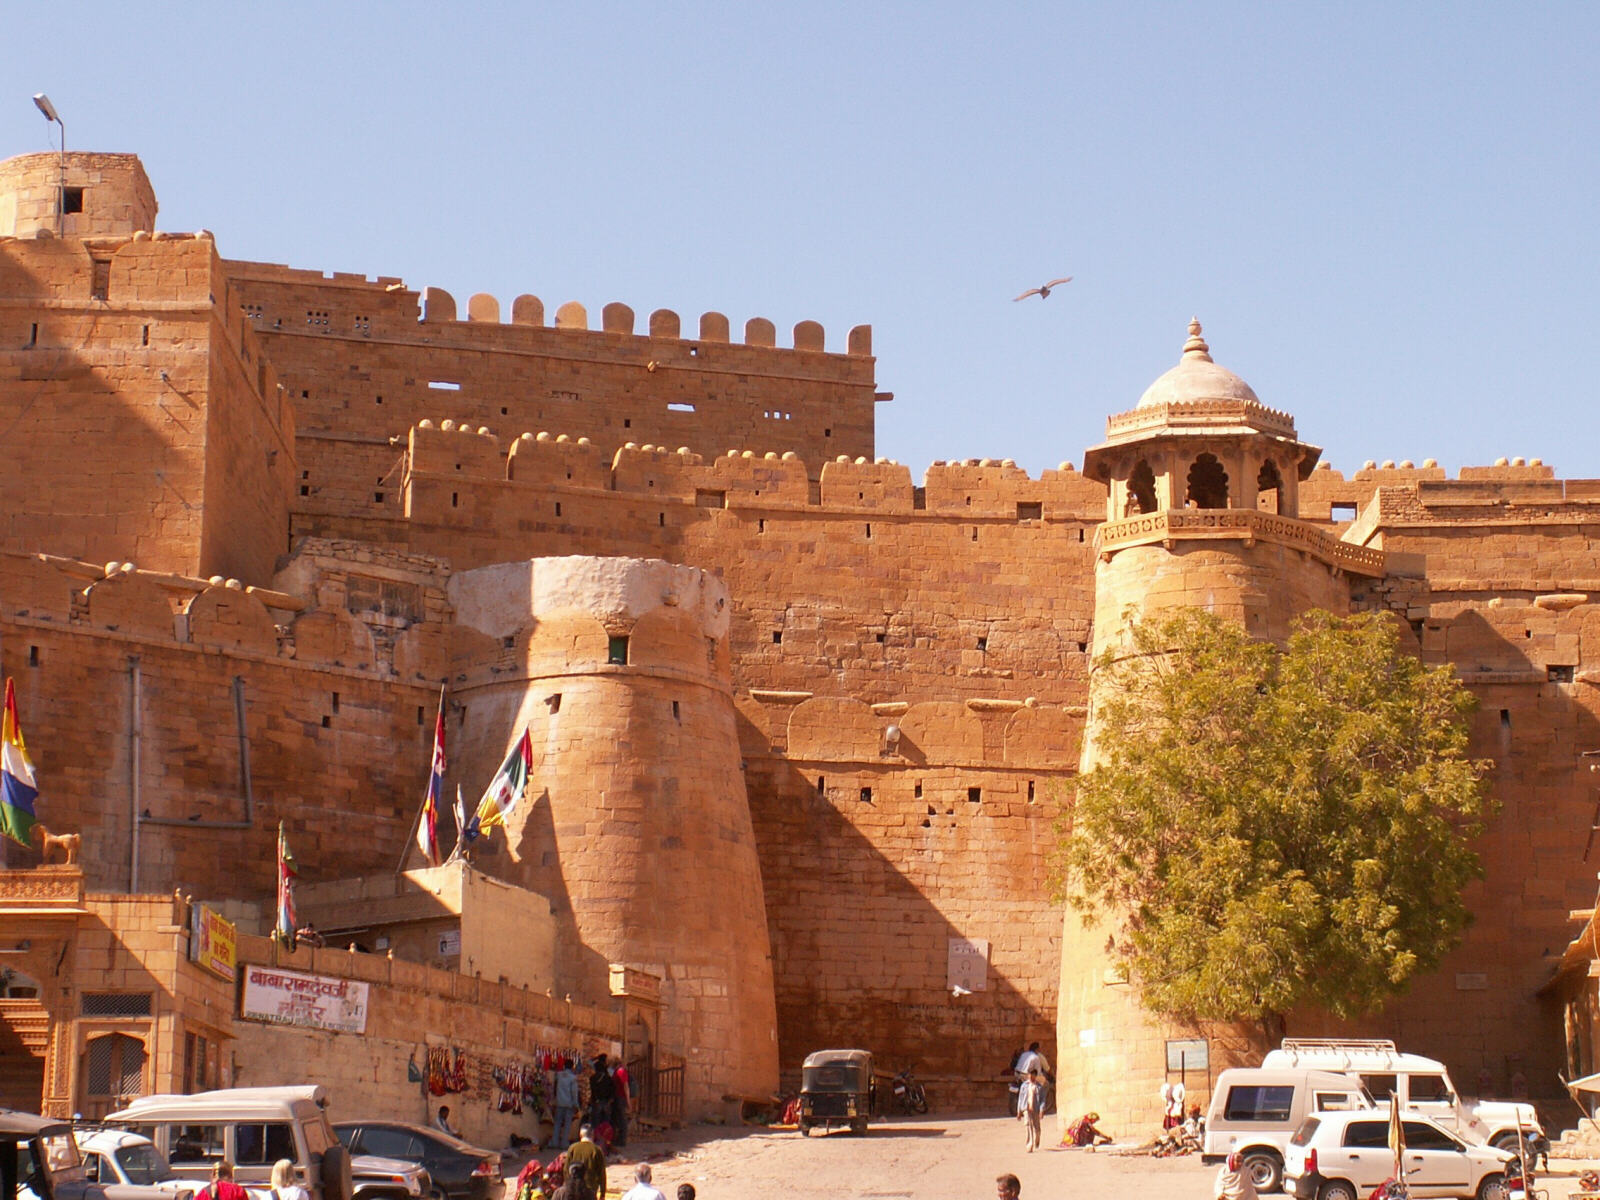 Gateways into the fort in Jaisalmer, Rajasthan